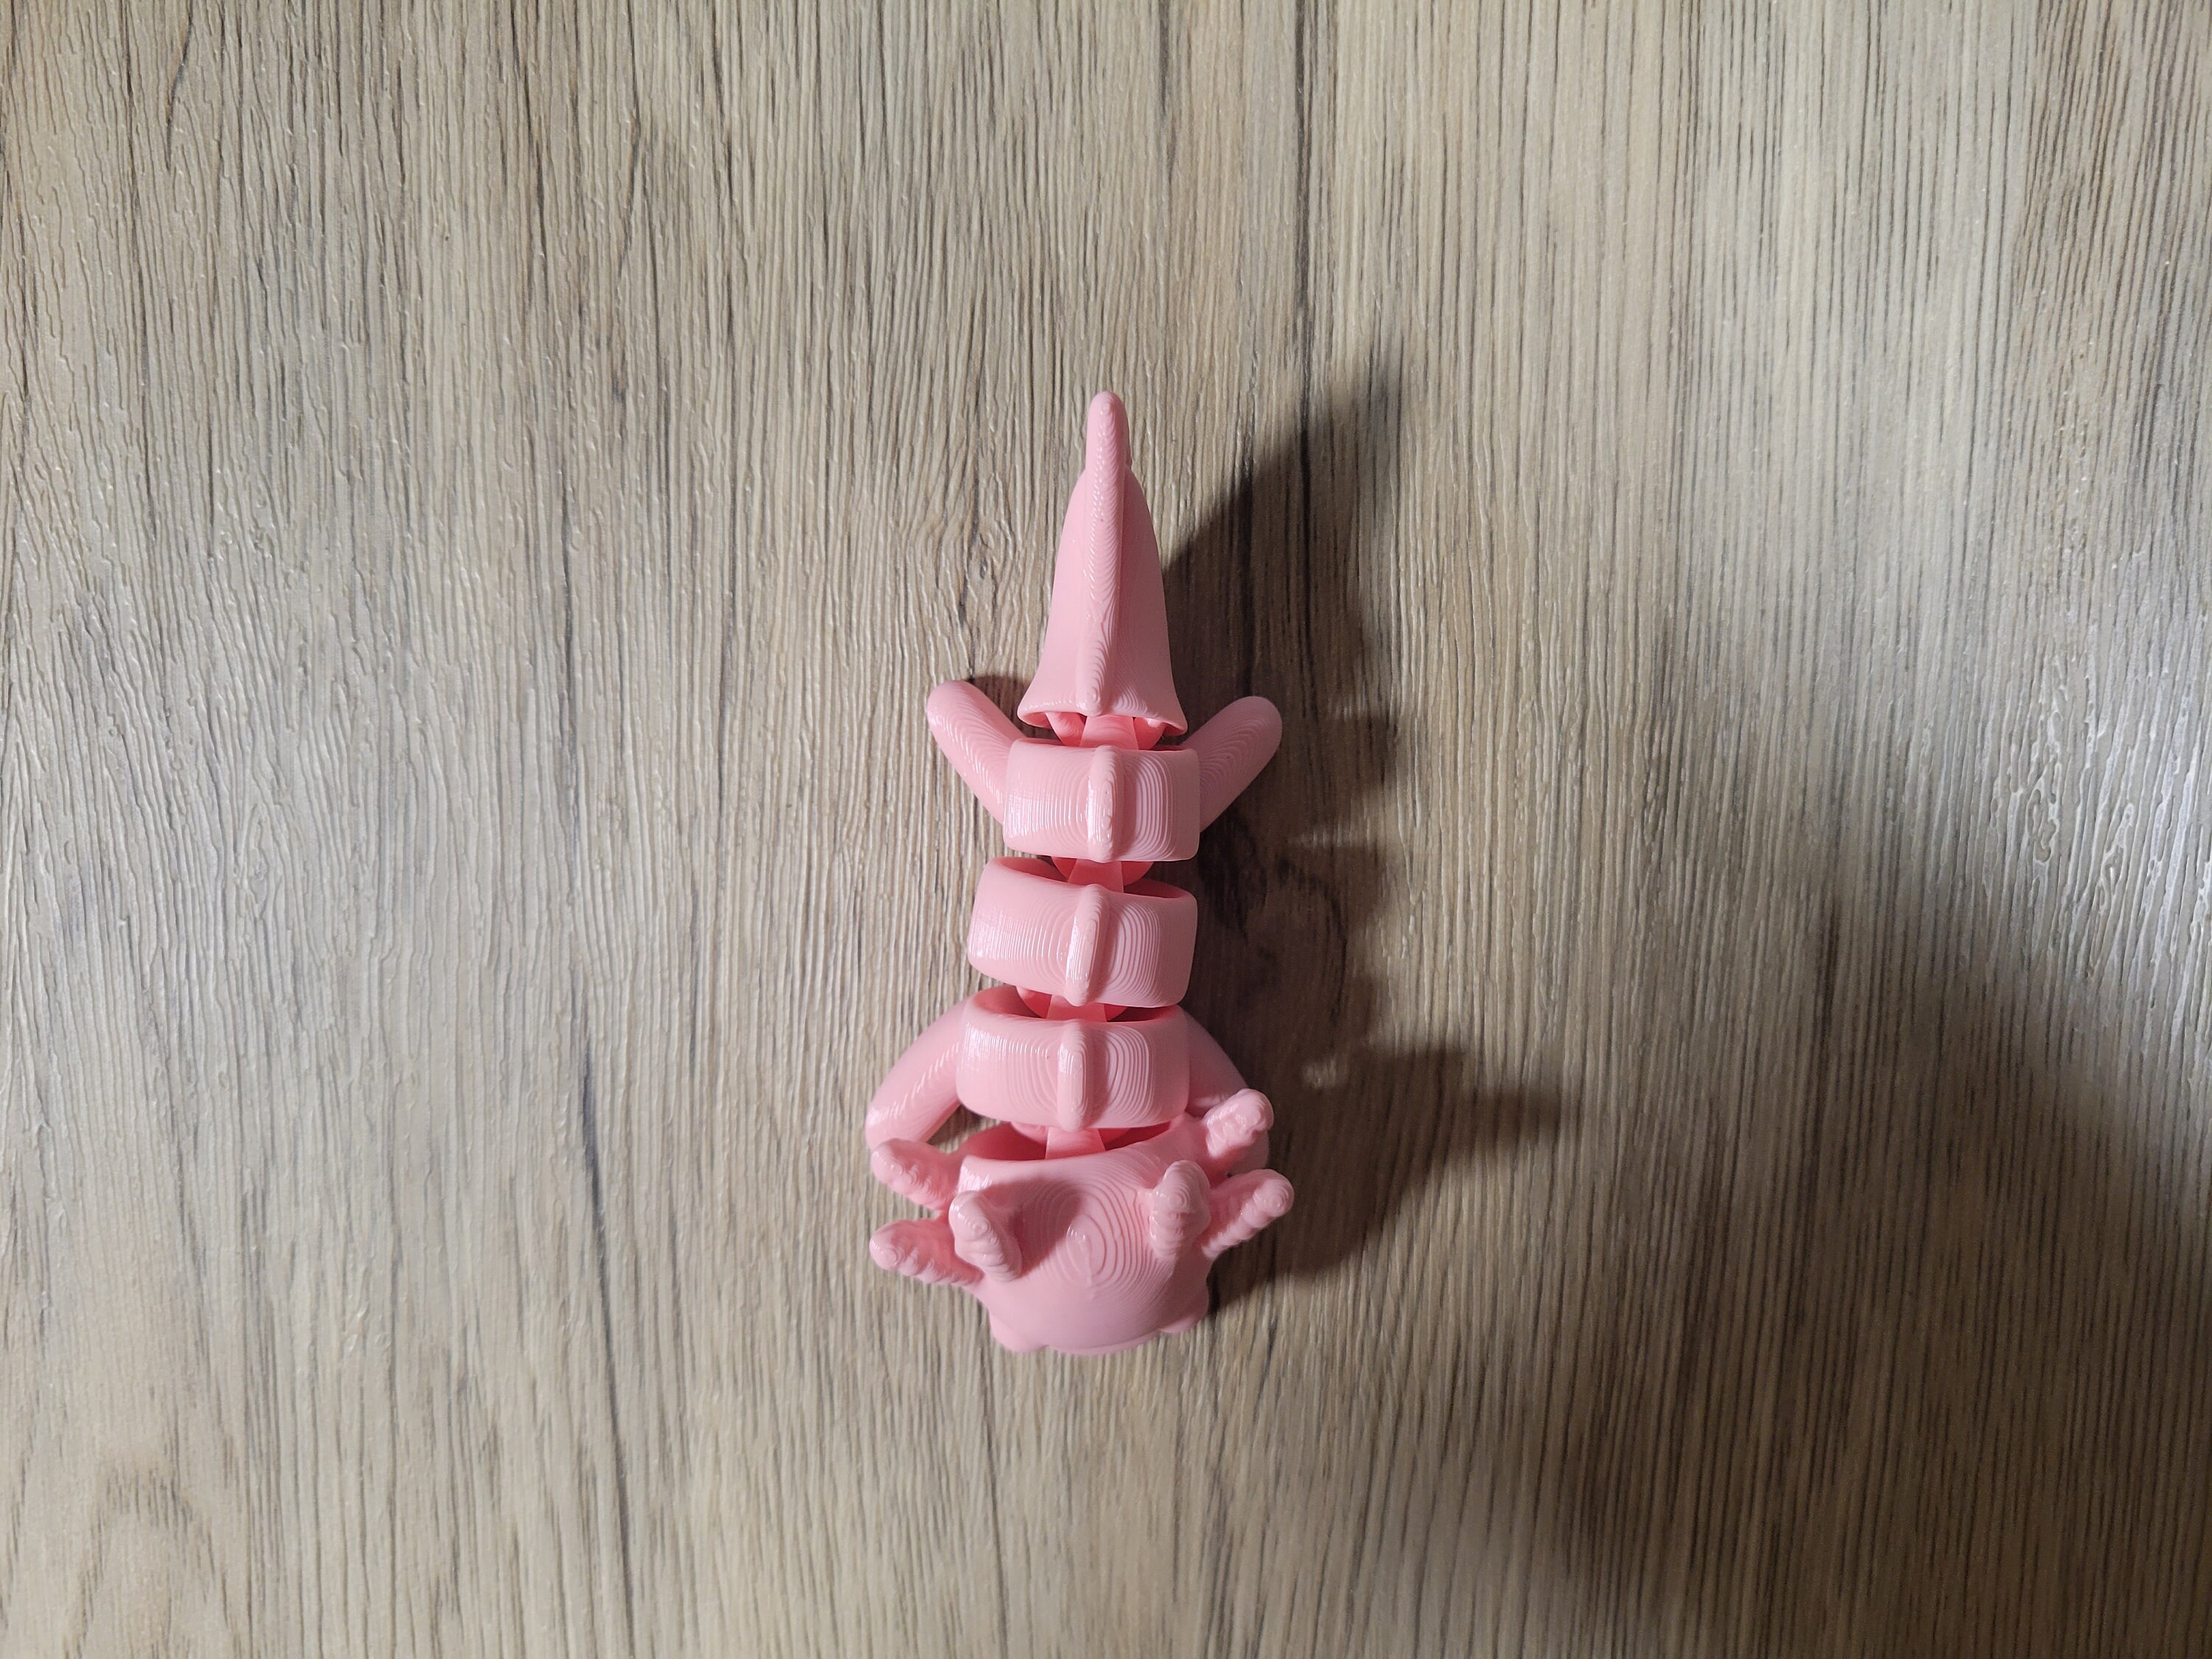 LAST CHANCE - LIMITED STOCK - Axolotl Bendable Fidget Toys - Cute